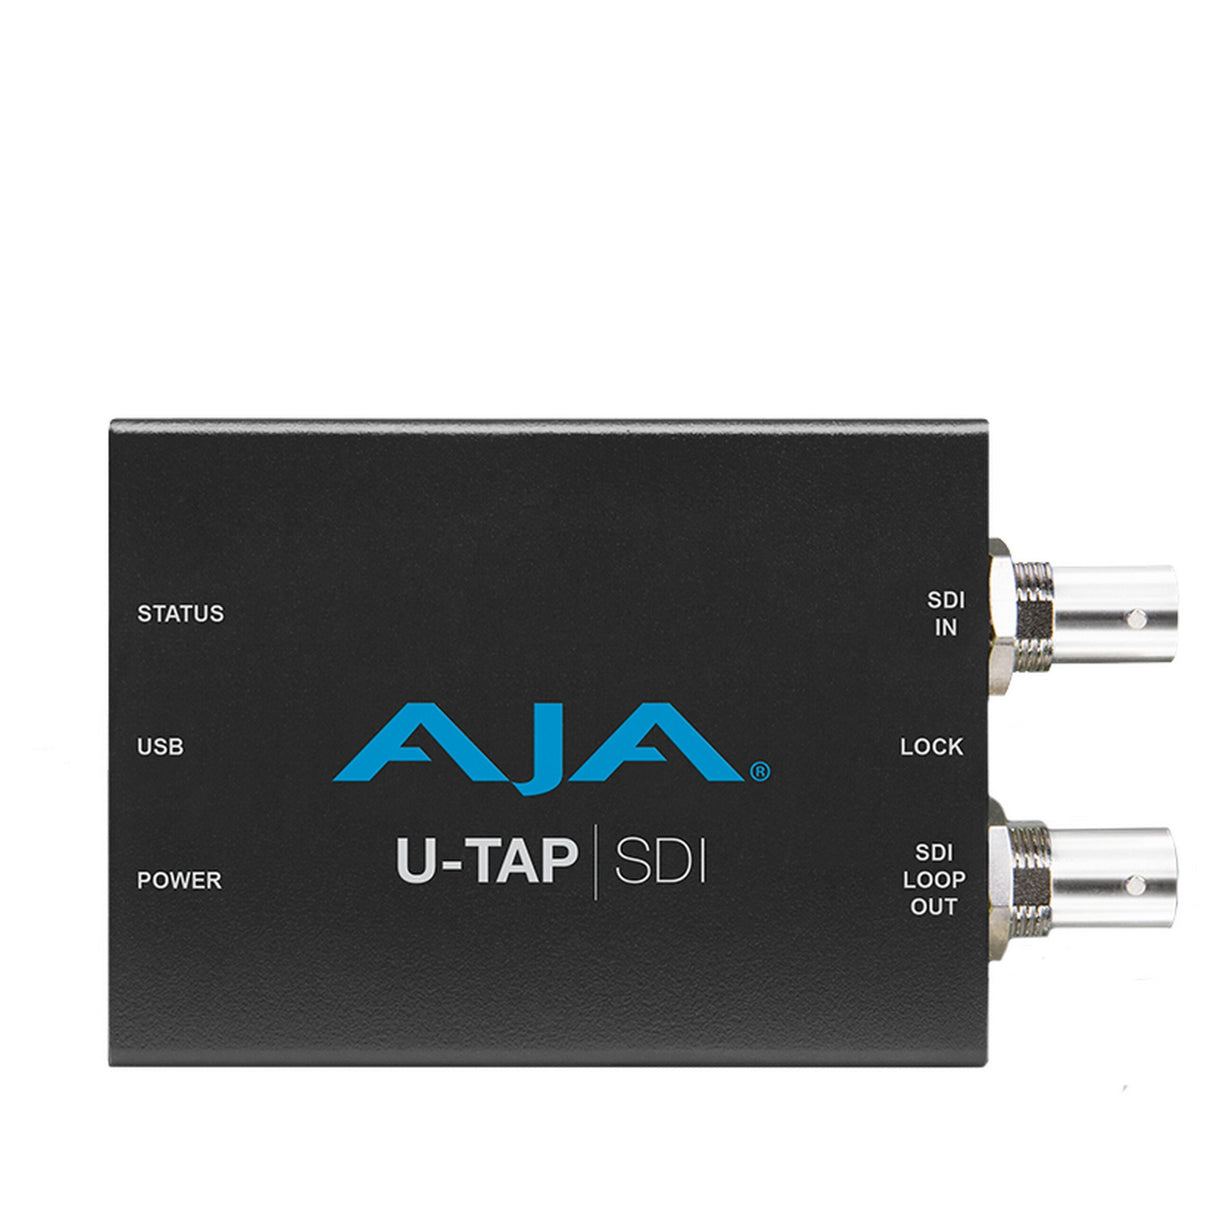 AJA U-TAP-SDI HD/SD USB 3.0 Capture Device for Mac/Windows/Linux (Used)